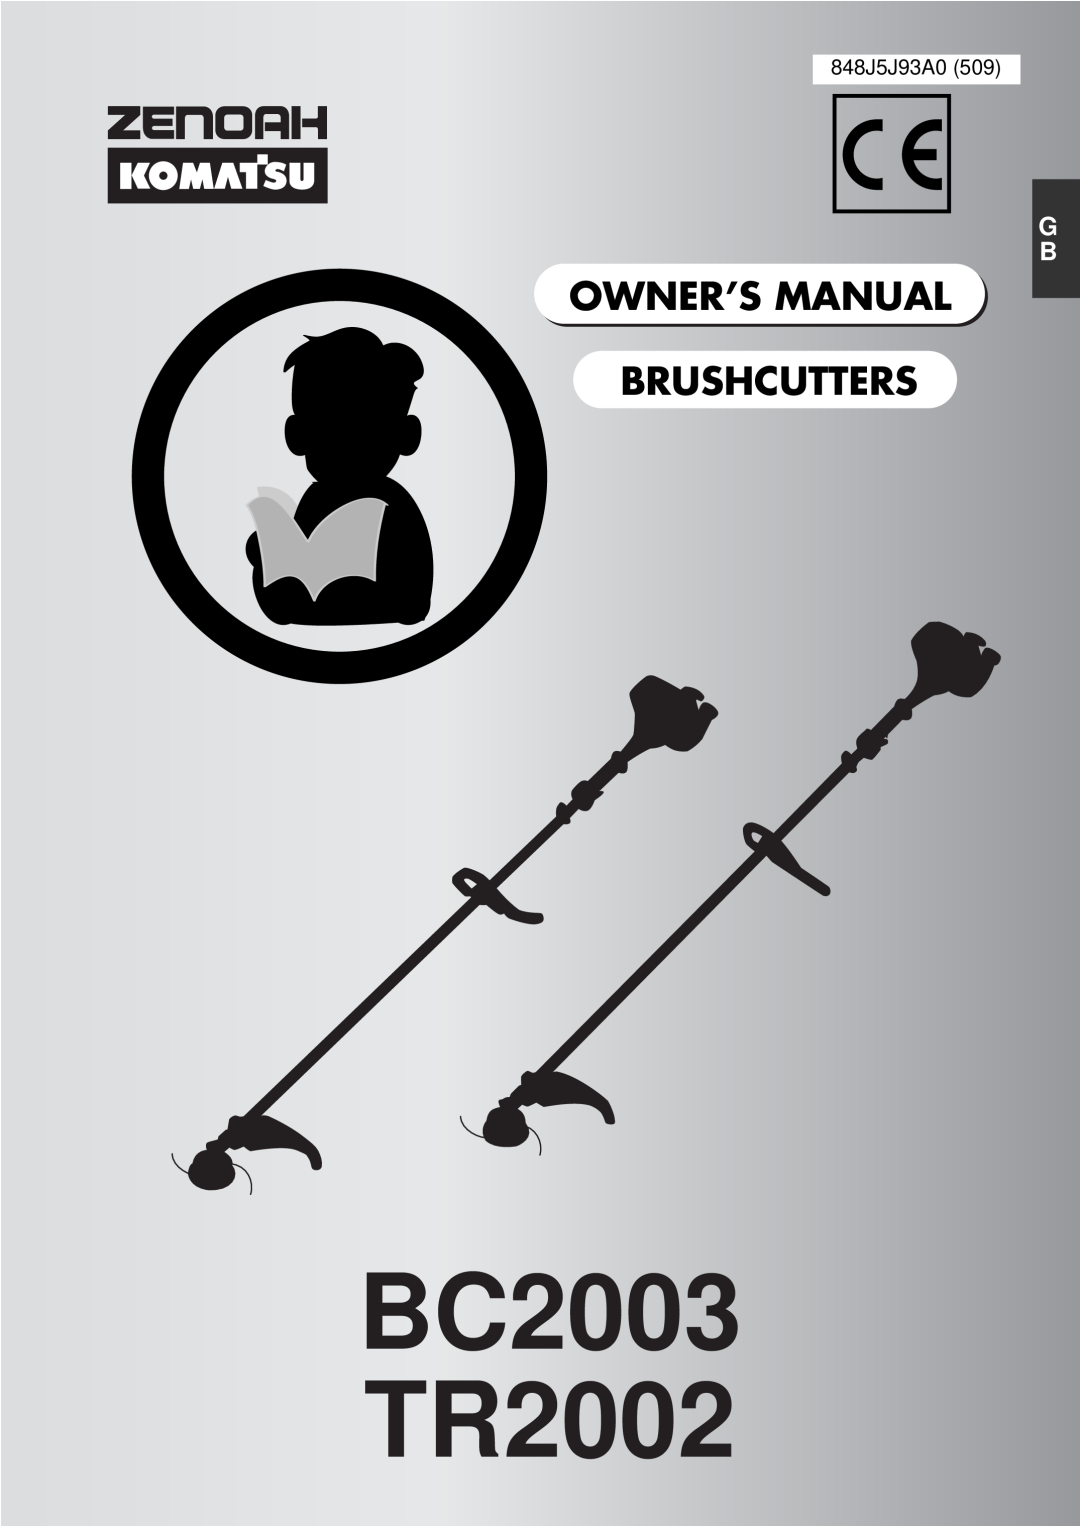 Zenoah owner manual 848J5J93A0, BC2003 TR2002 